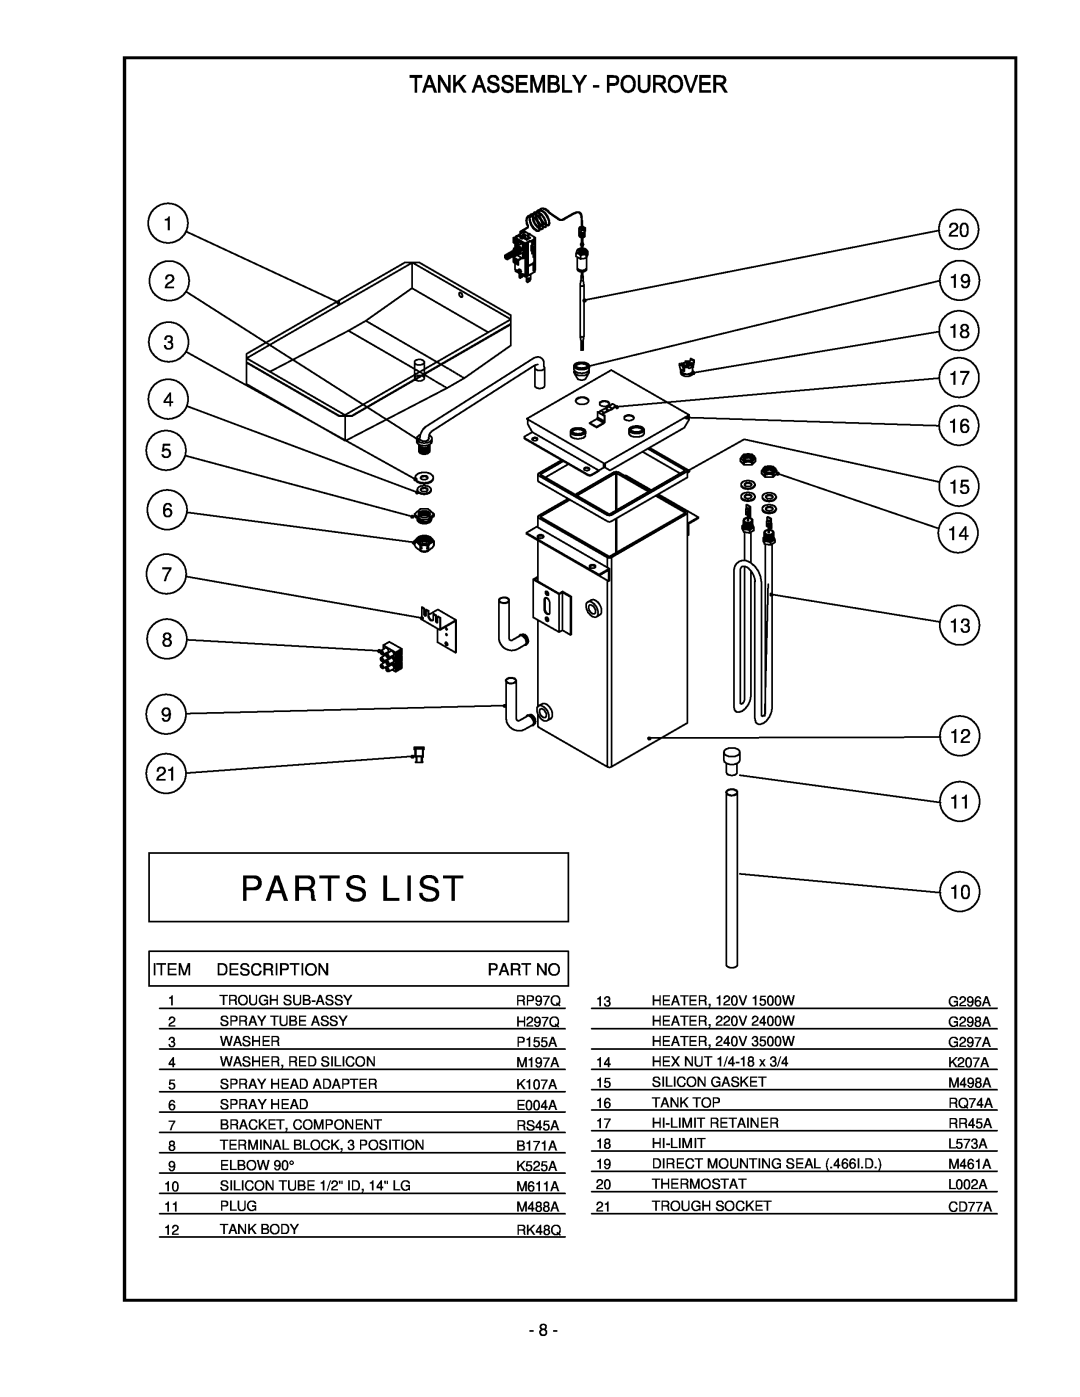 Cecilware 2000 manual Parts List, 1 2 3 4 5 6 7 8, 20 19 18 17 16 15, Description 